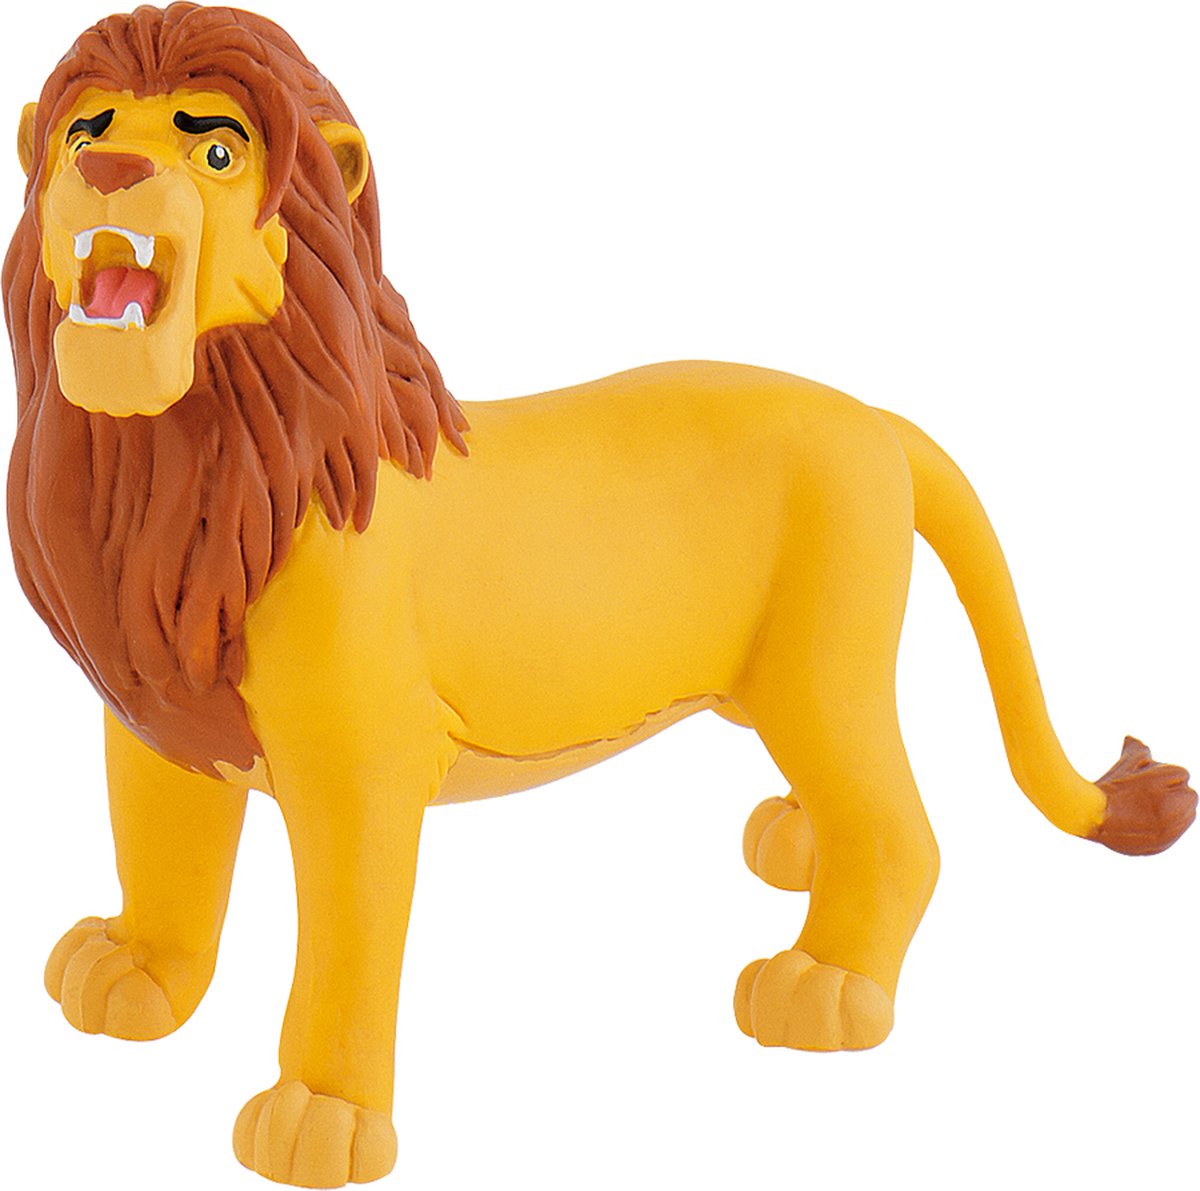 Disney Le roi Lion Simba gâteau 12,7 cm.